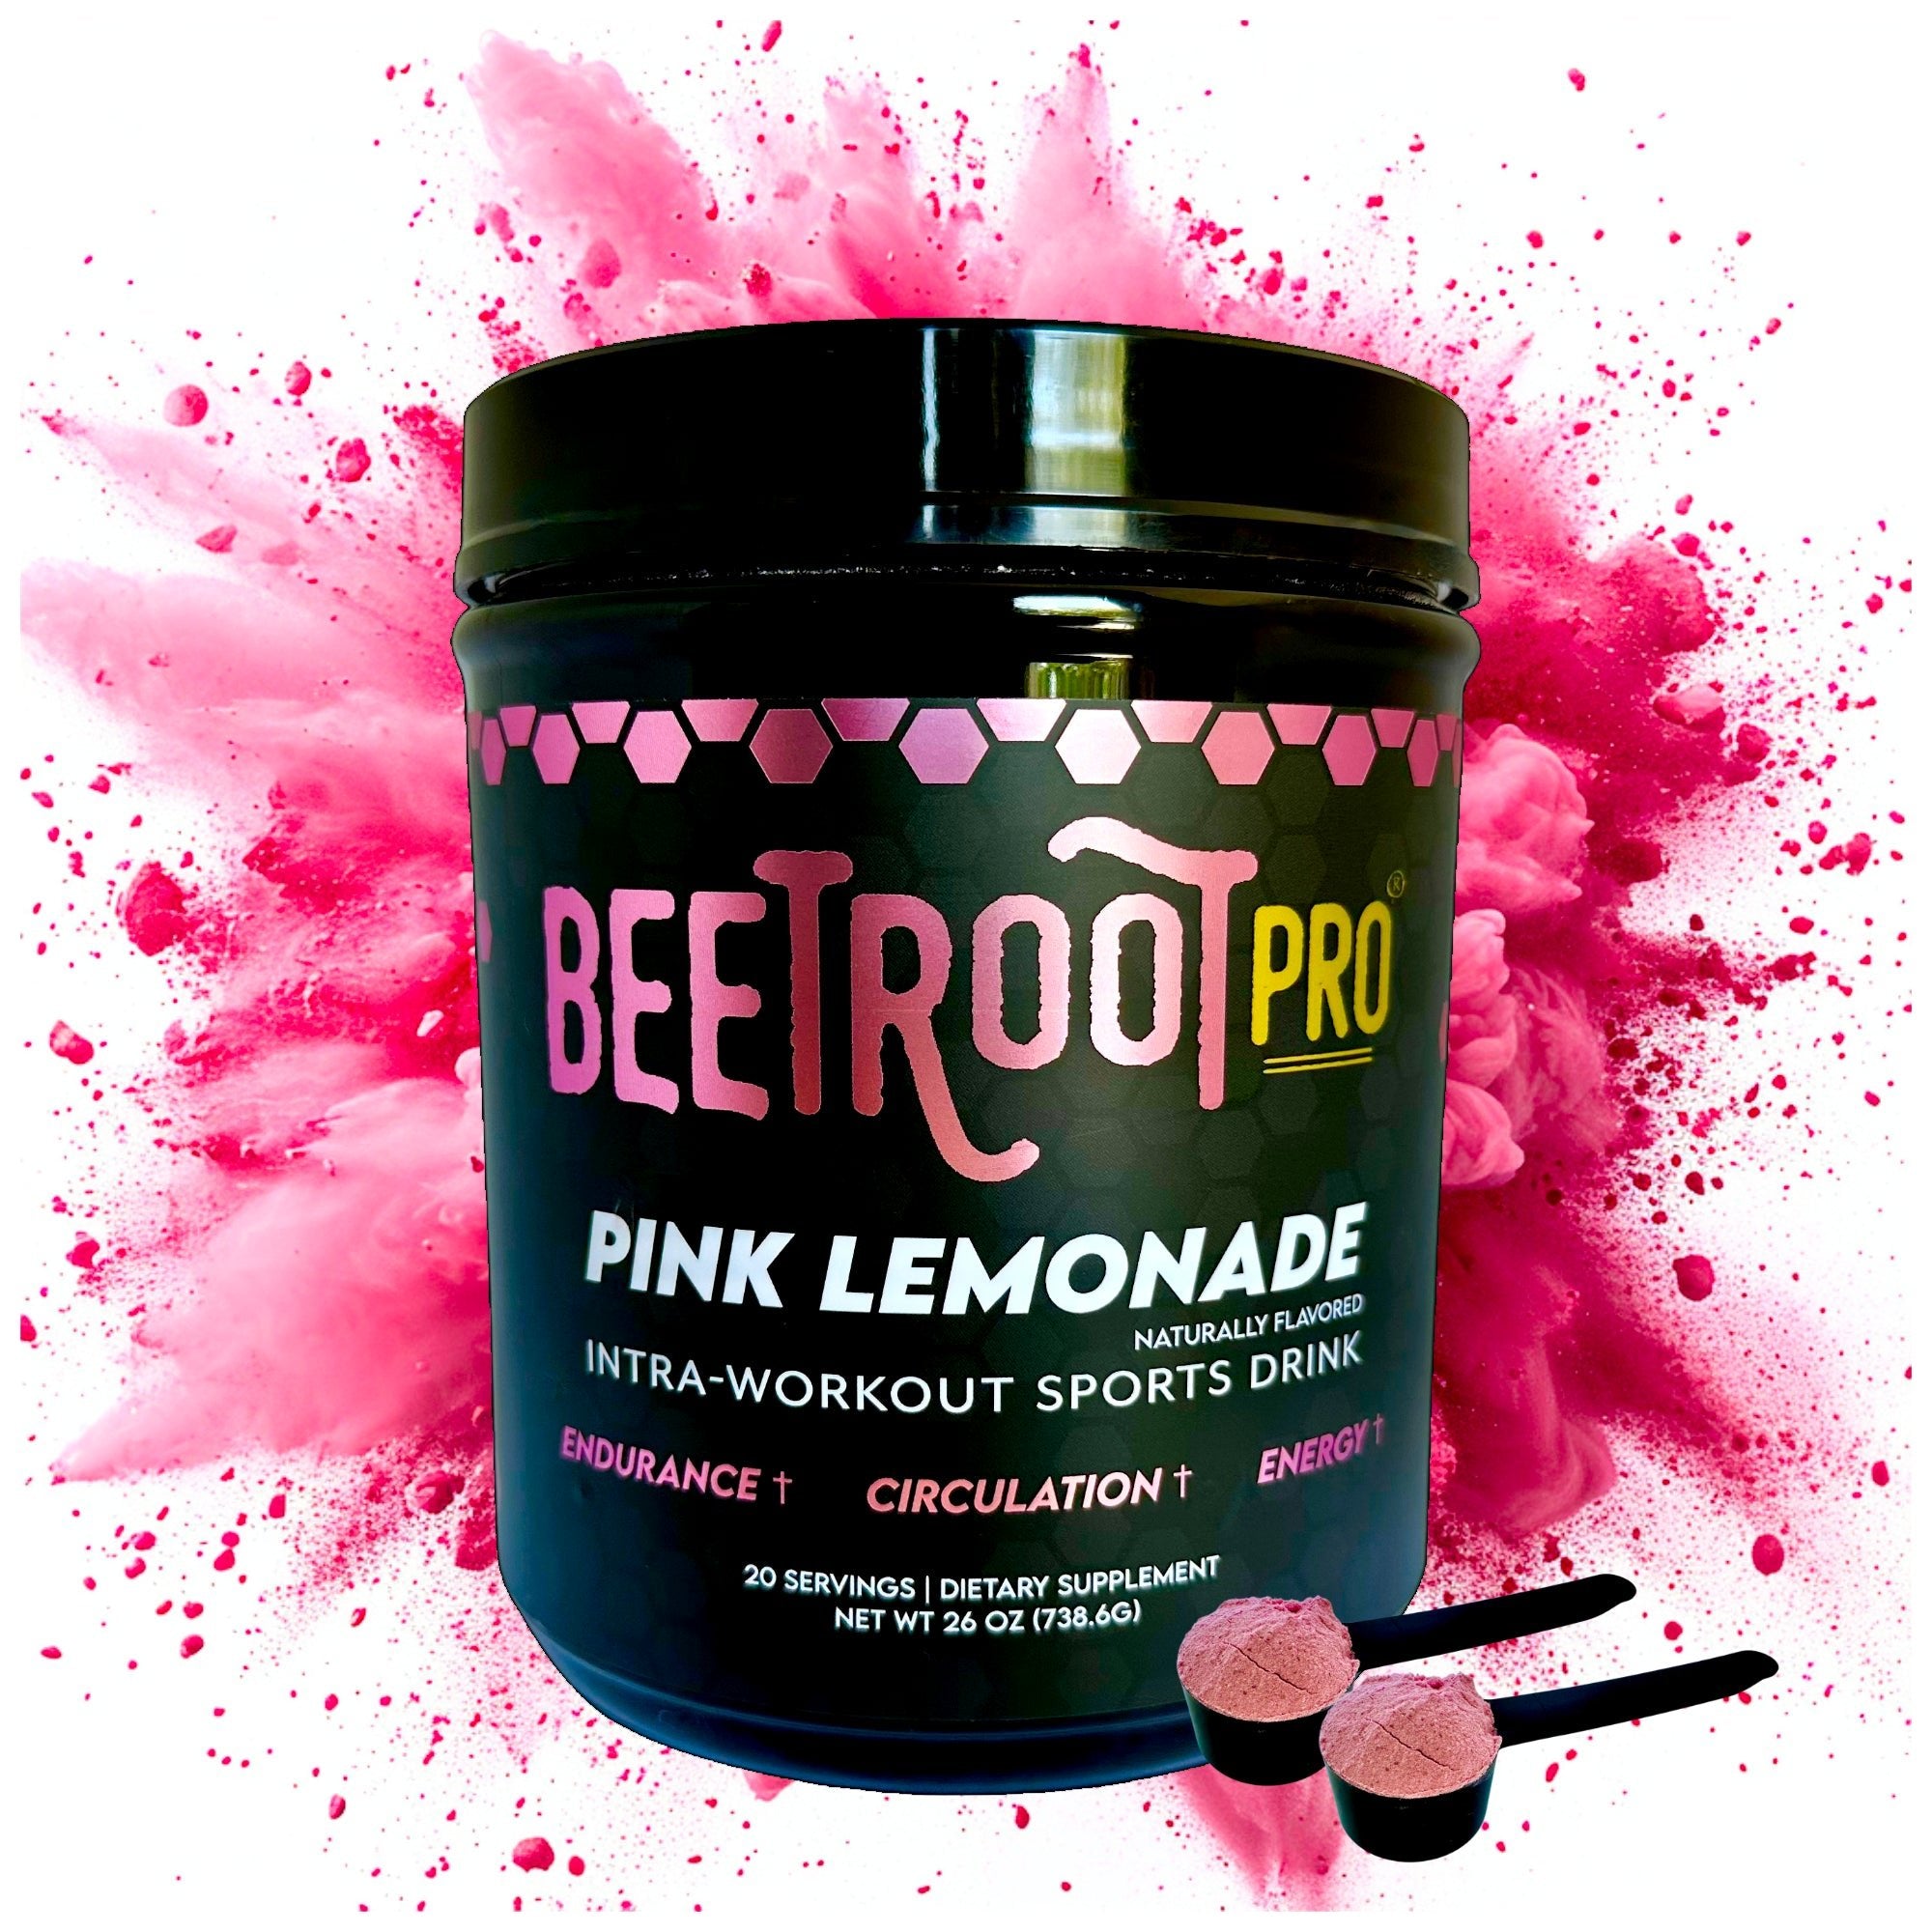 Beetroot Pro® Intra-Workout Pink Lemonade Endurance Fuel